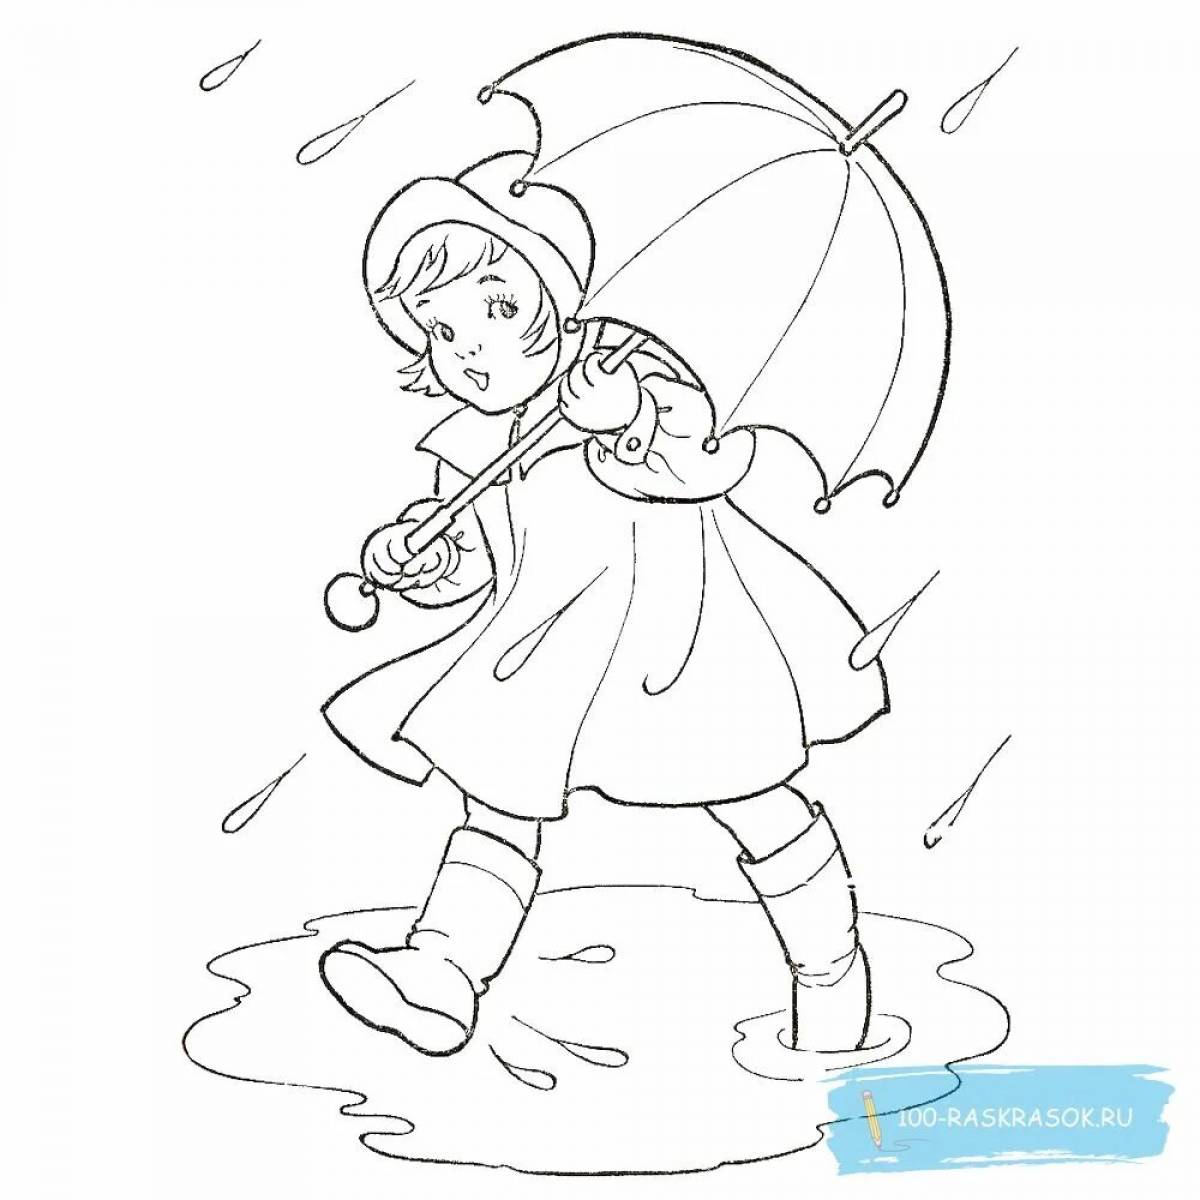 Girl with umbrella #6